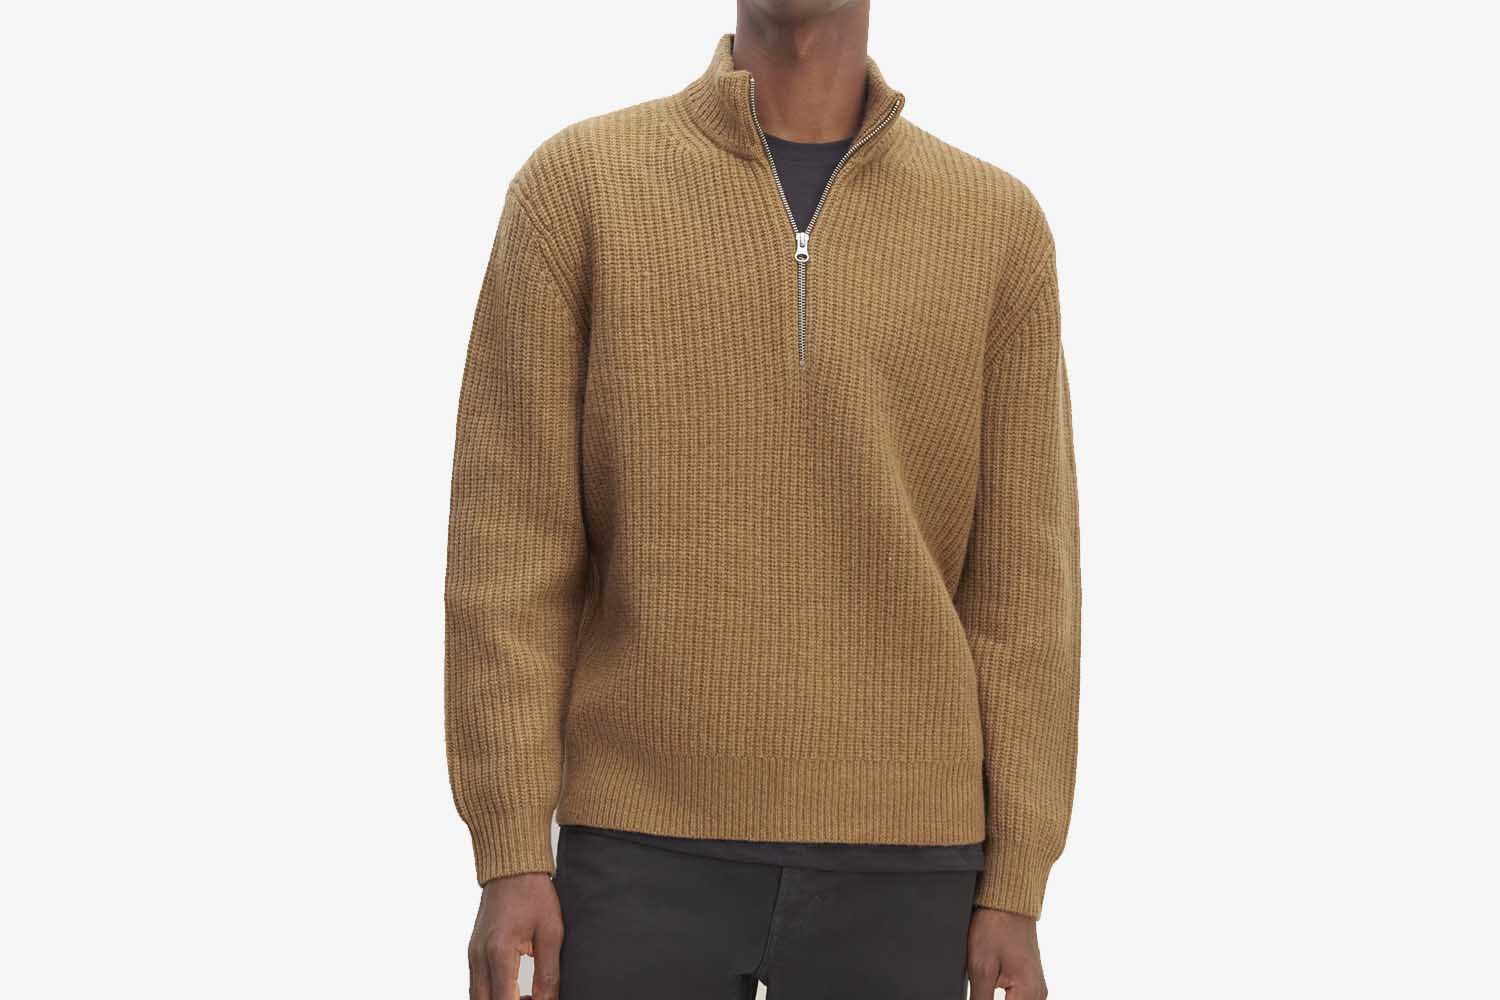 Everlane The Felted Merino Half-Zip Sweater